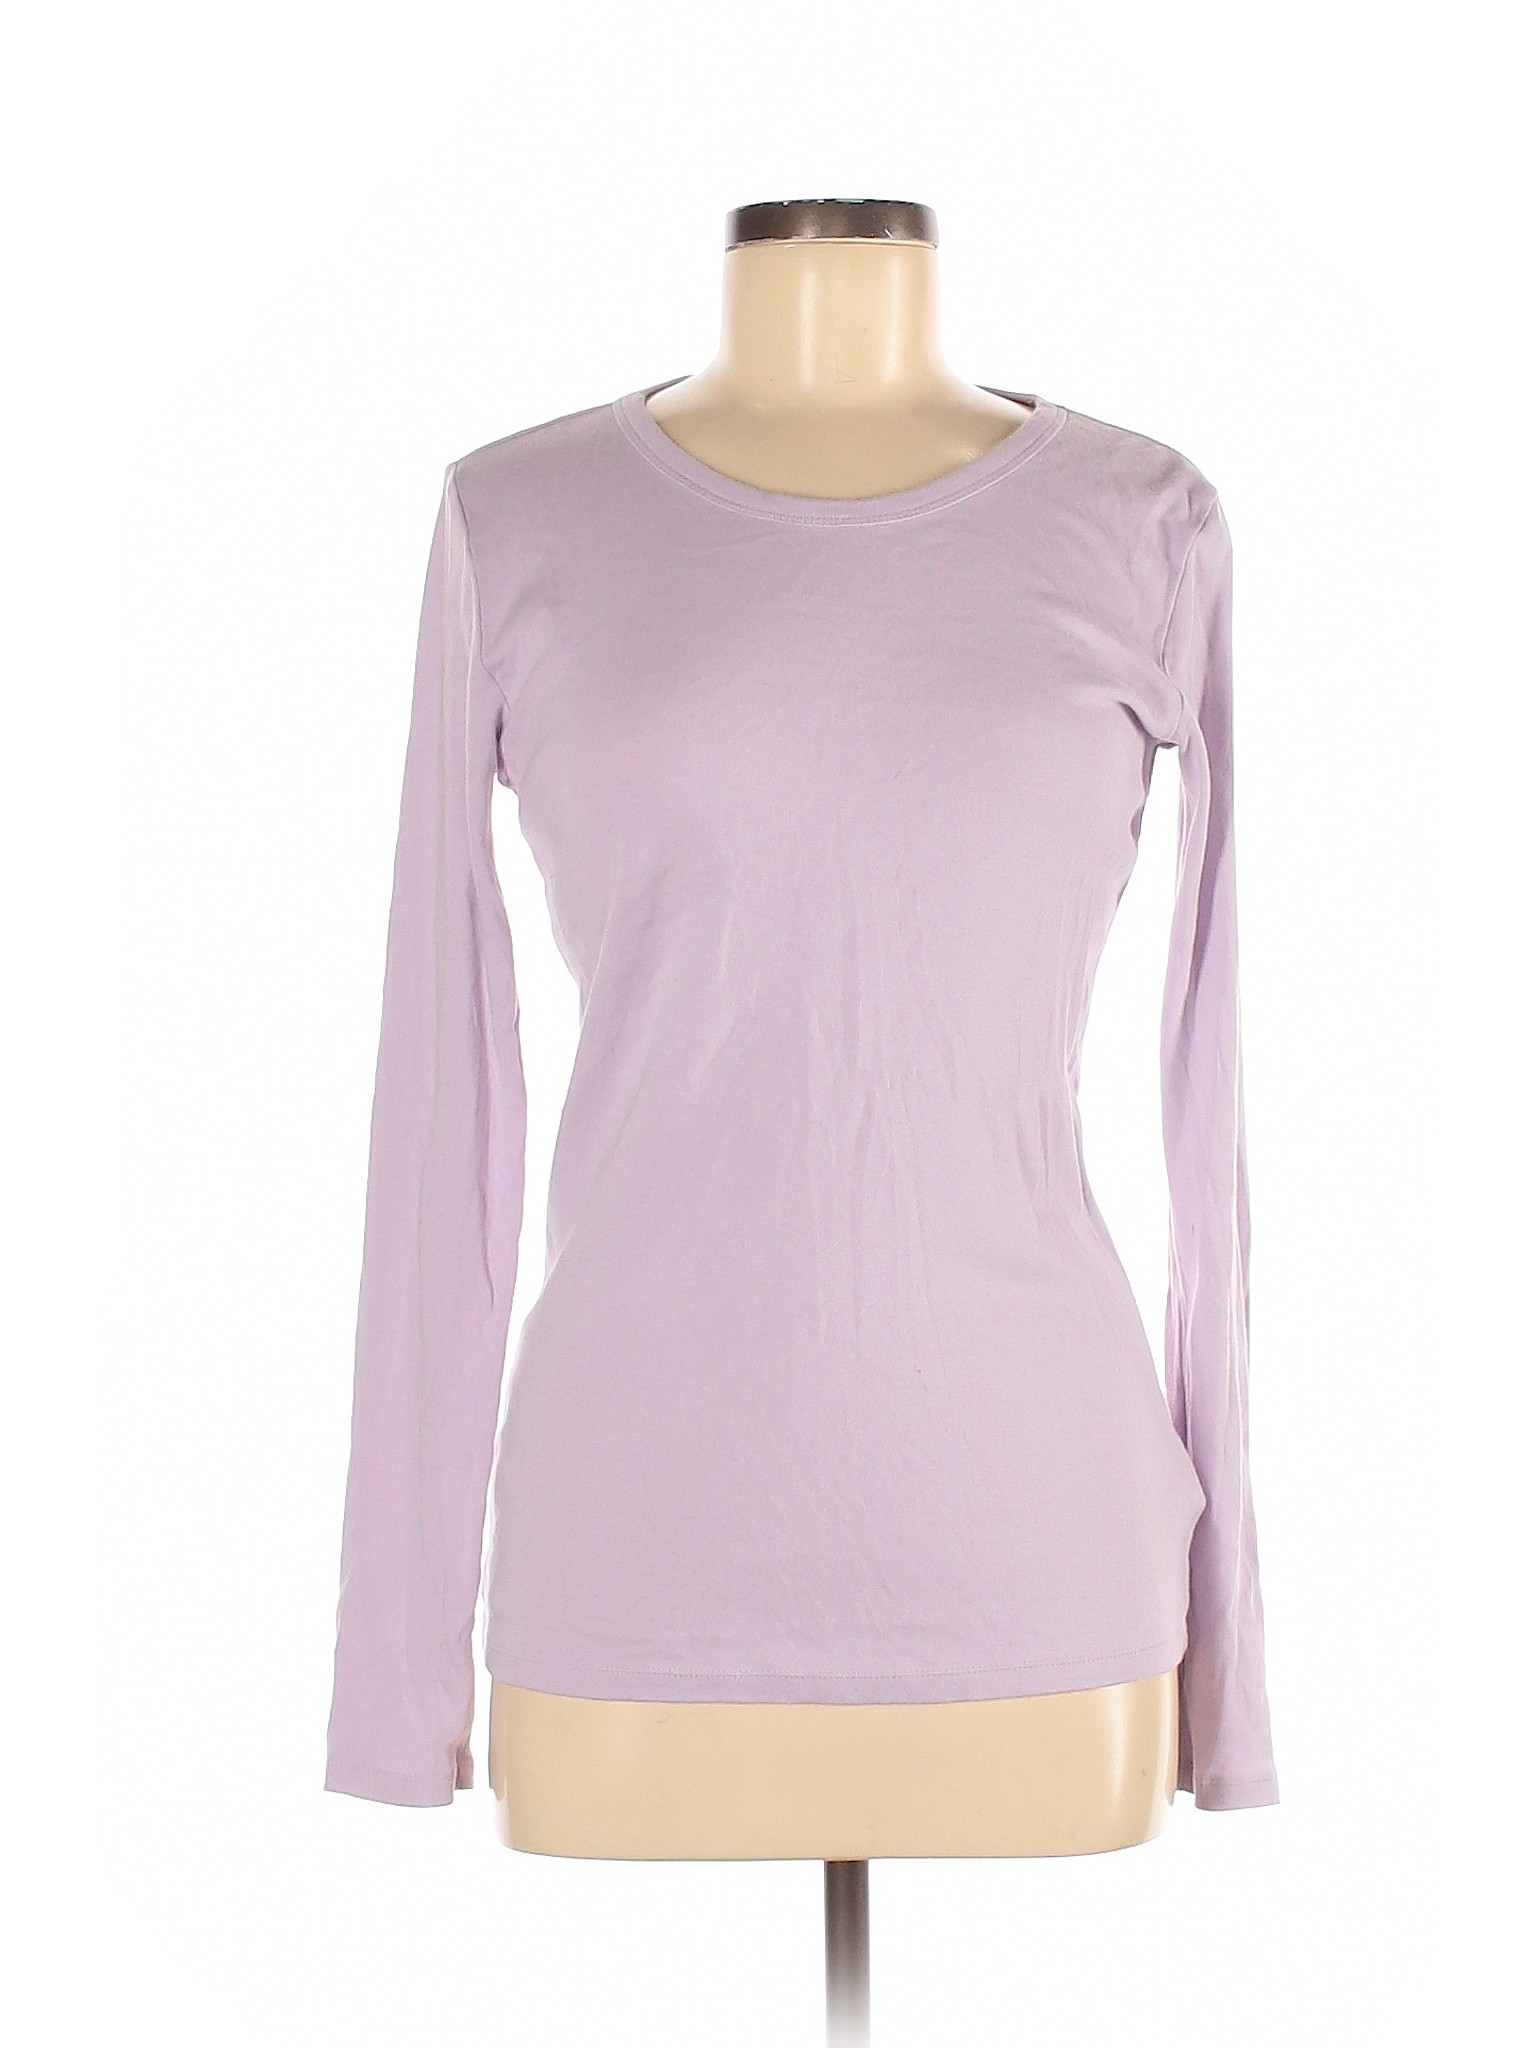 Gap Women Purple Long Sleeve T-Shirt M | eBay